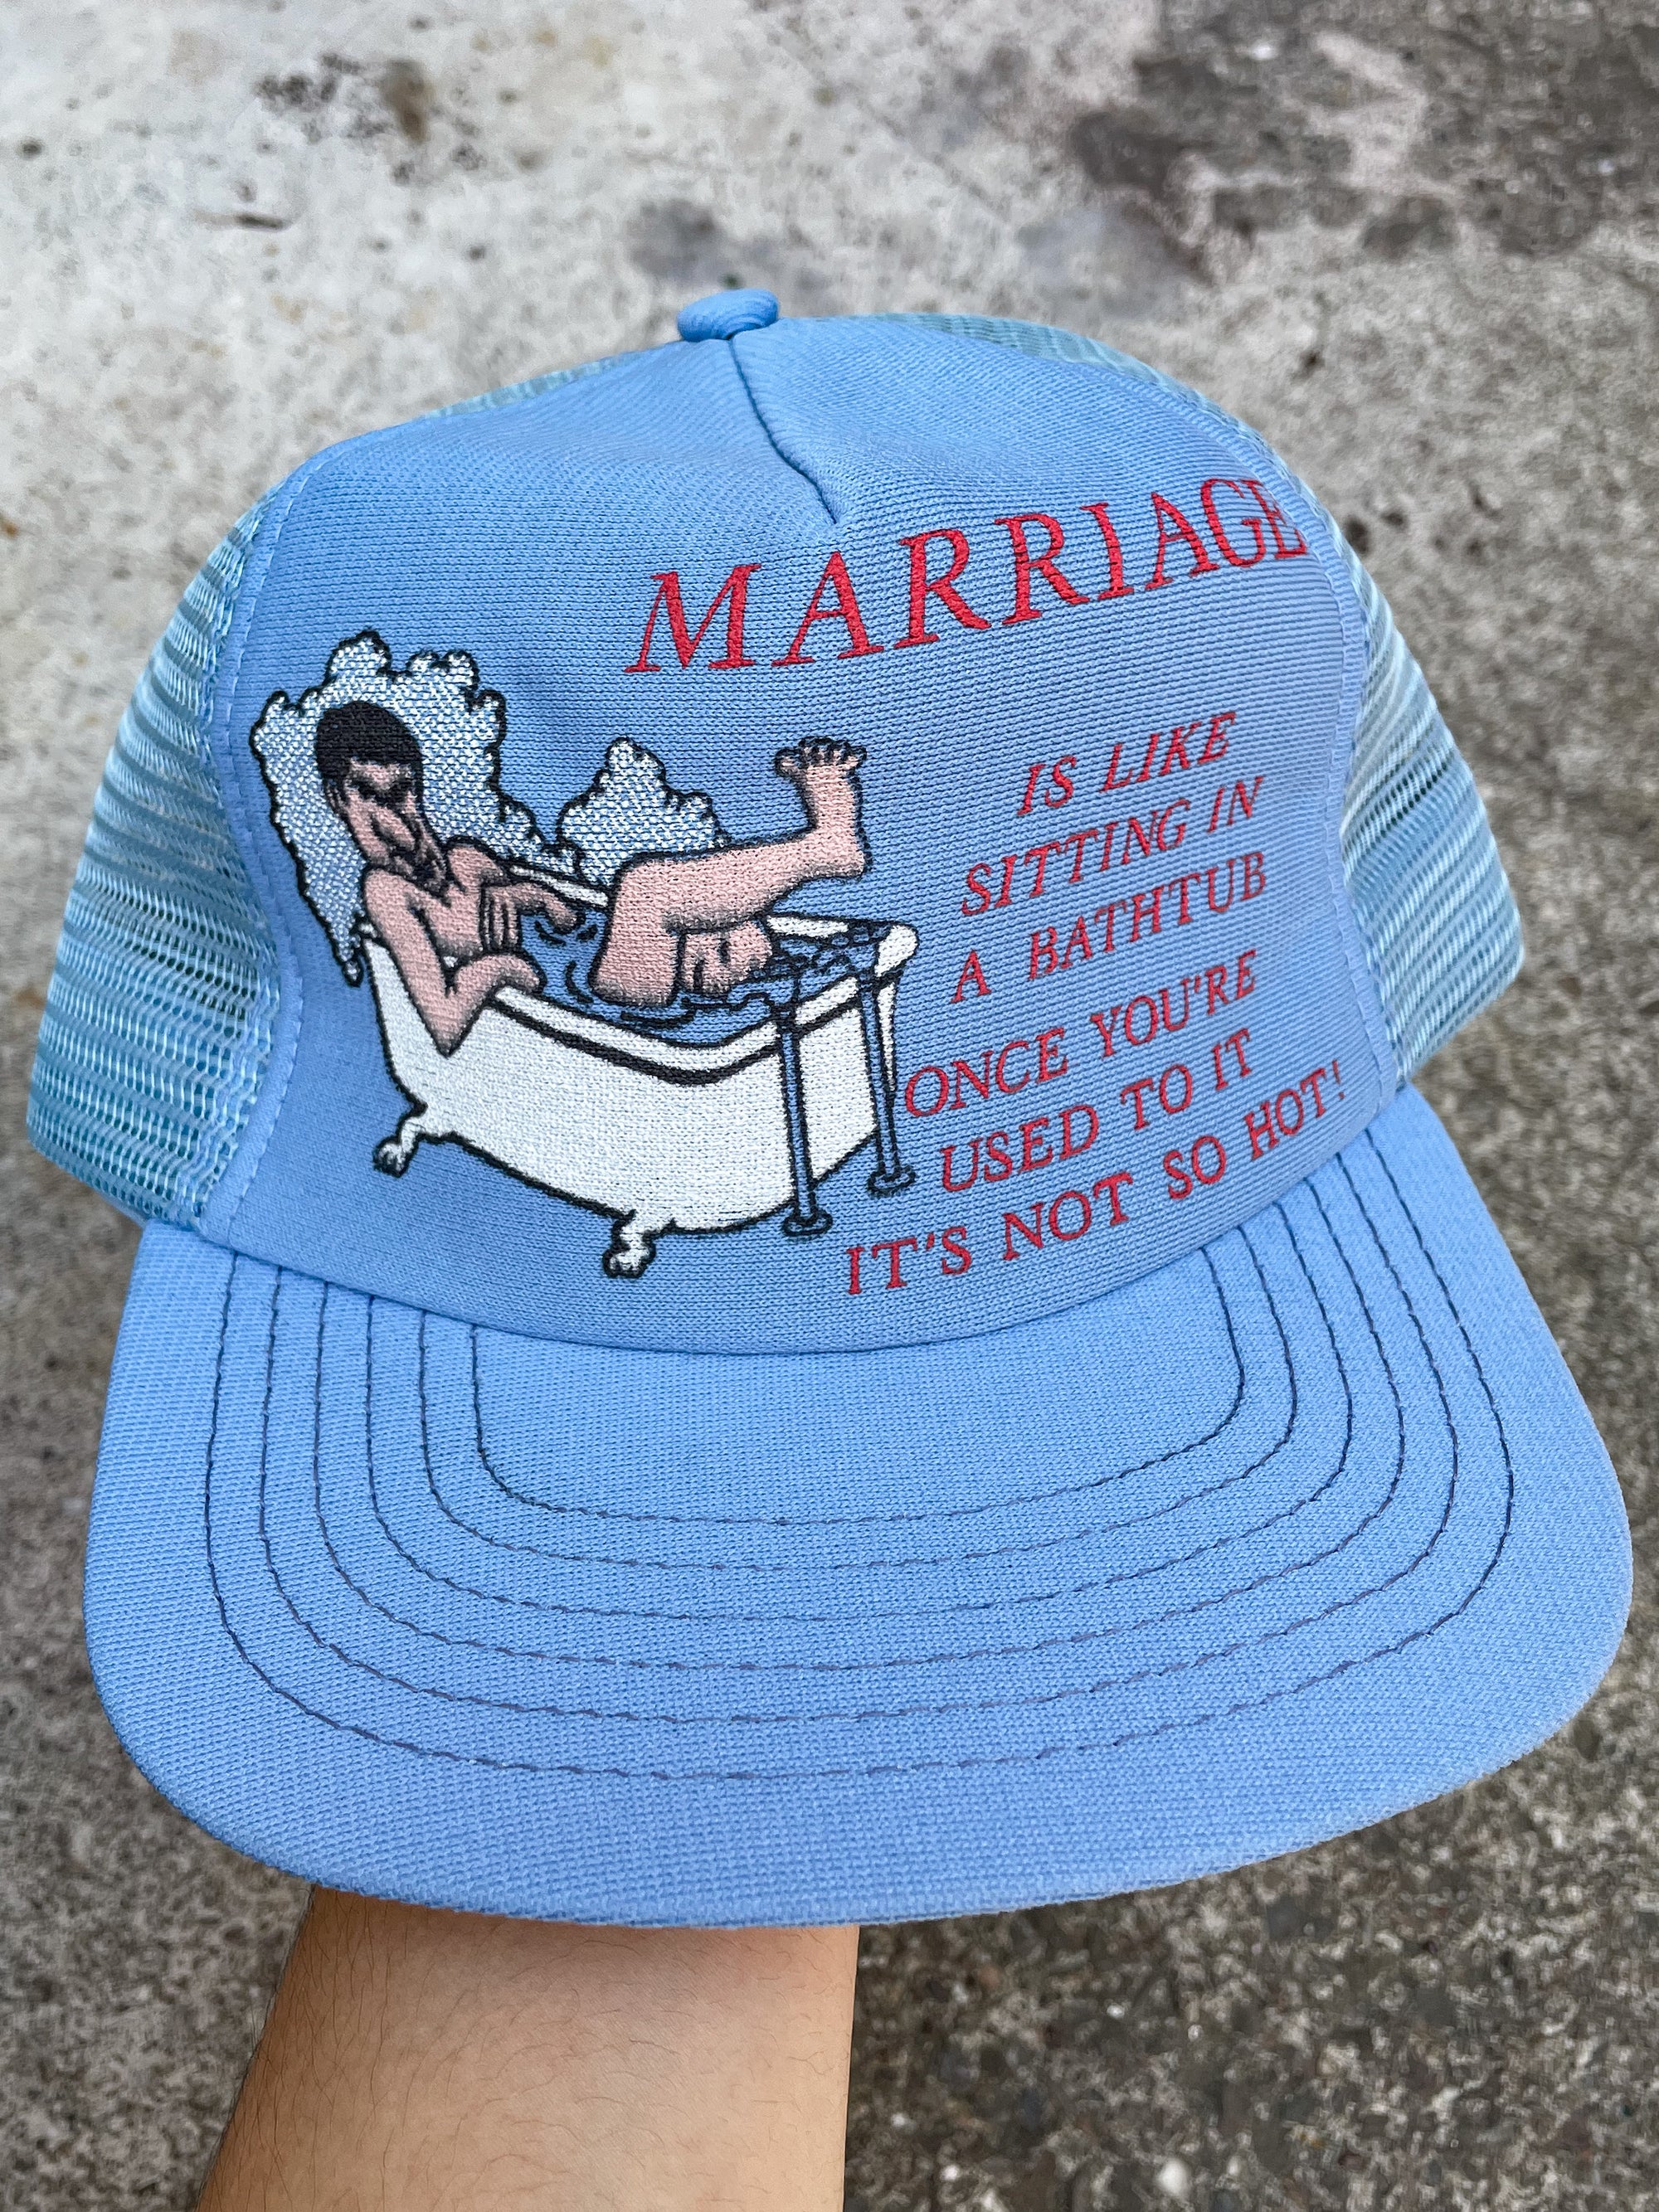 1980s “Marriage…” Trucker Hat